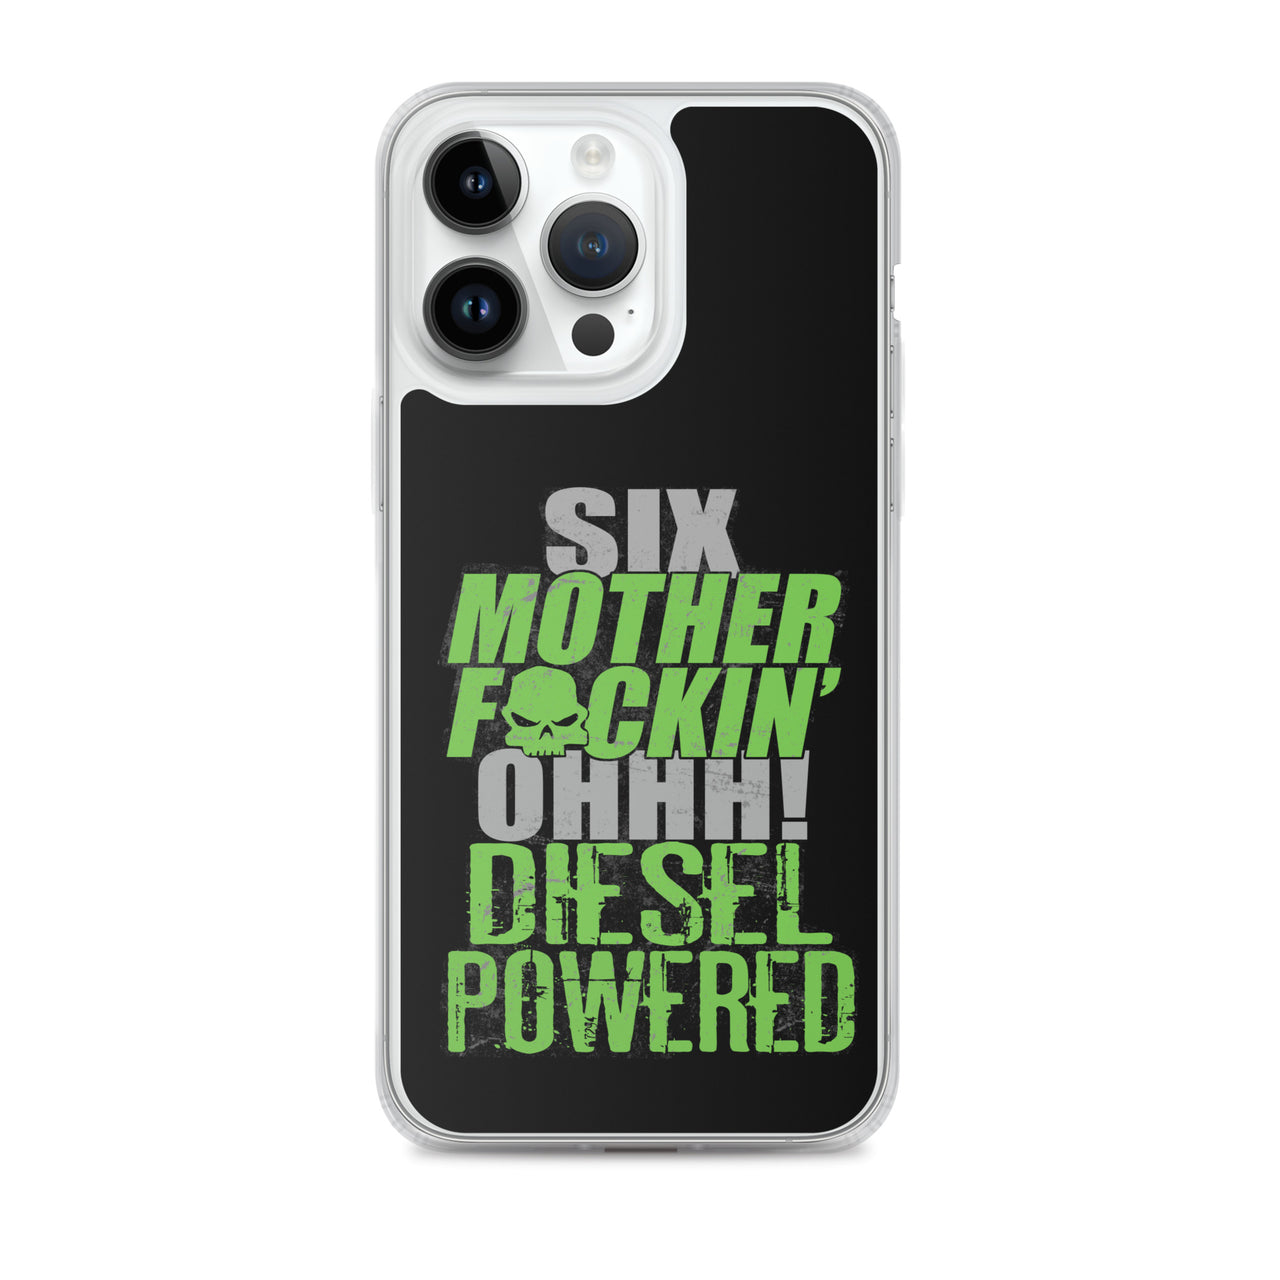 Power Stroke Powerstroke 6.0 Phone Case - Fits iPhone